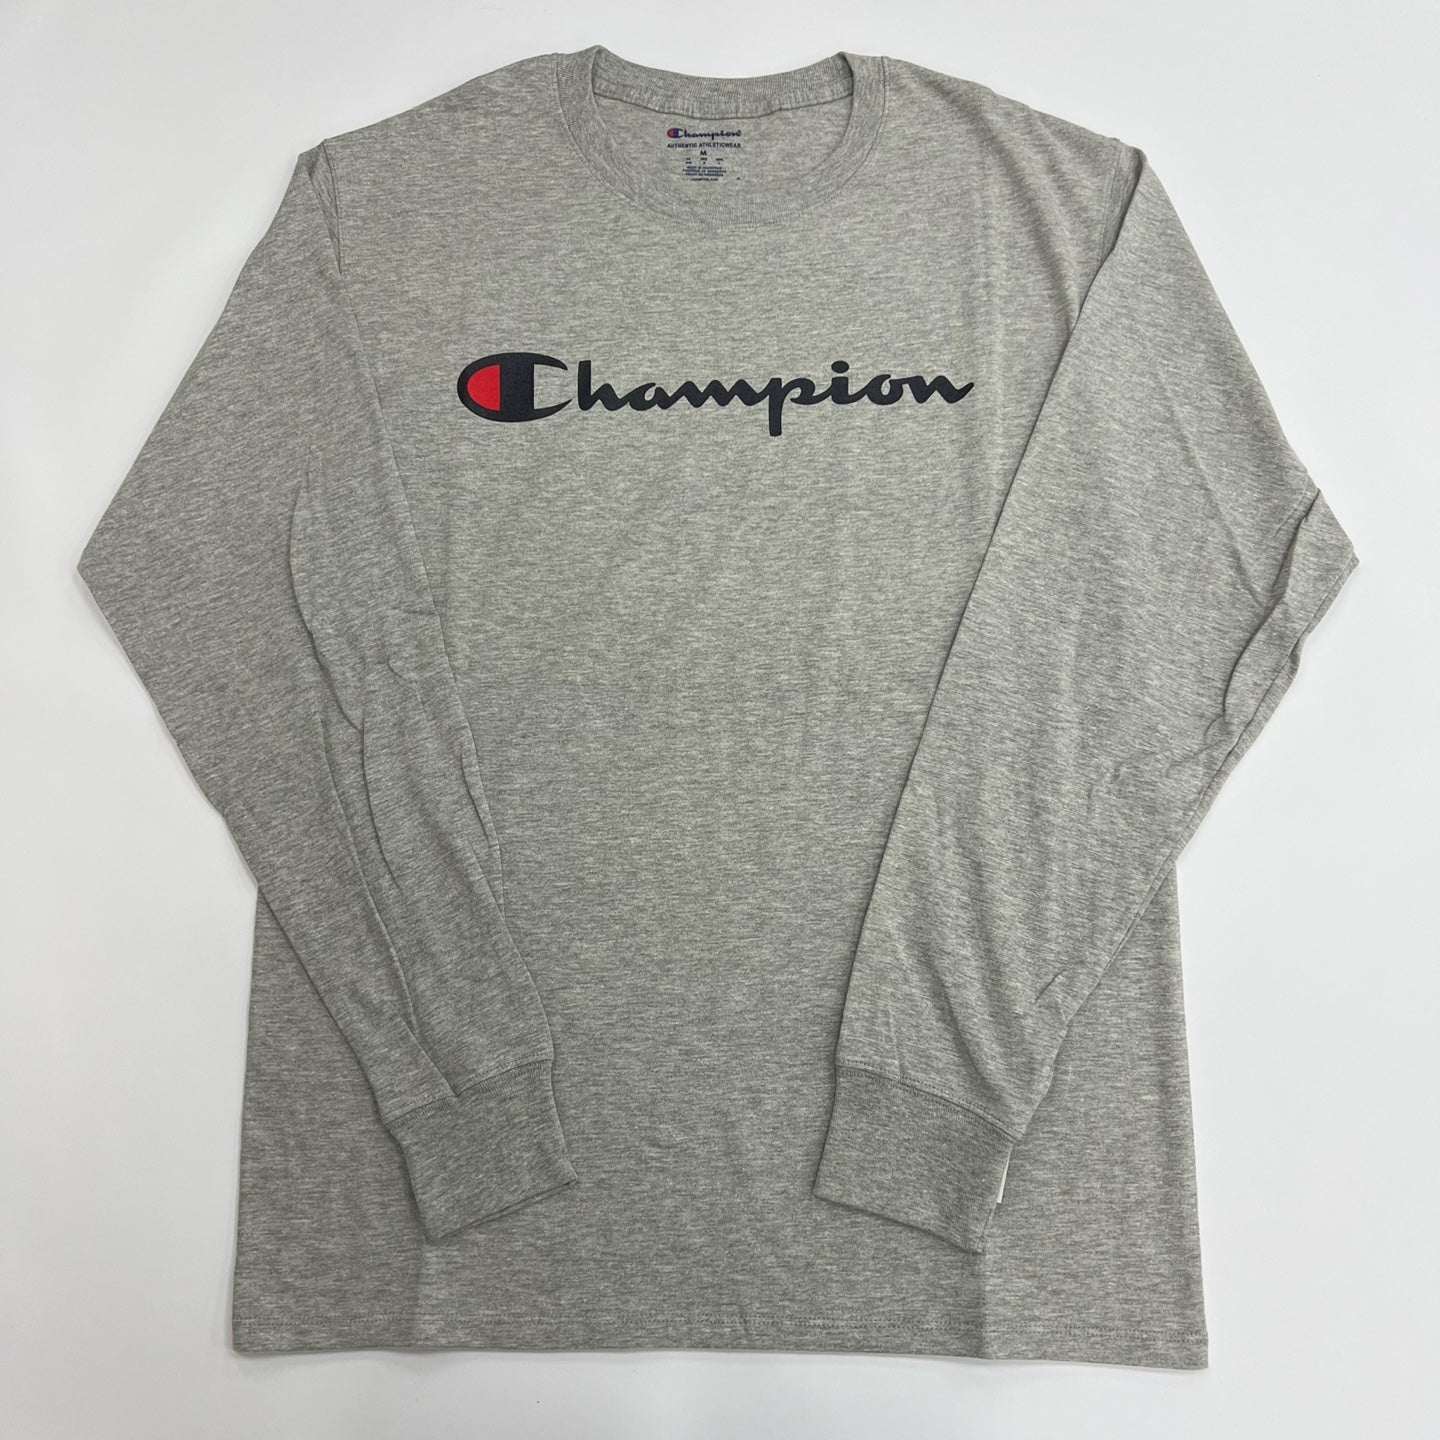 Champion Men's T-Shirt - Grey - M